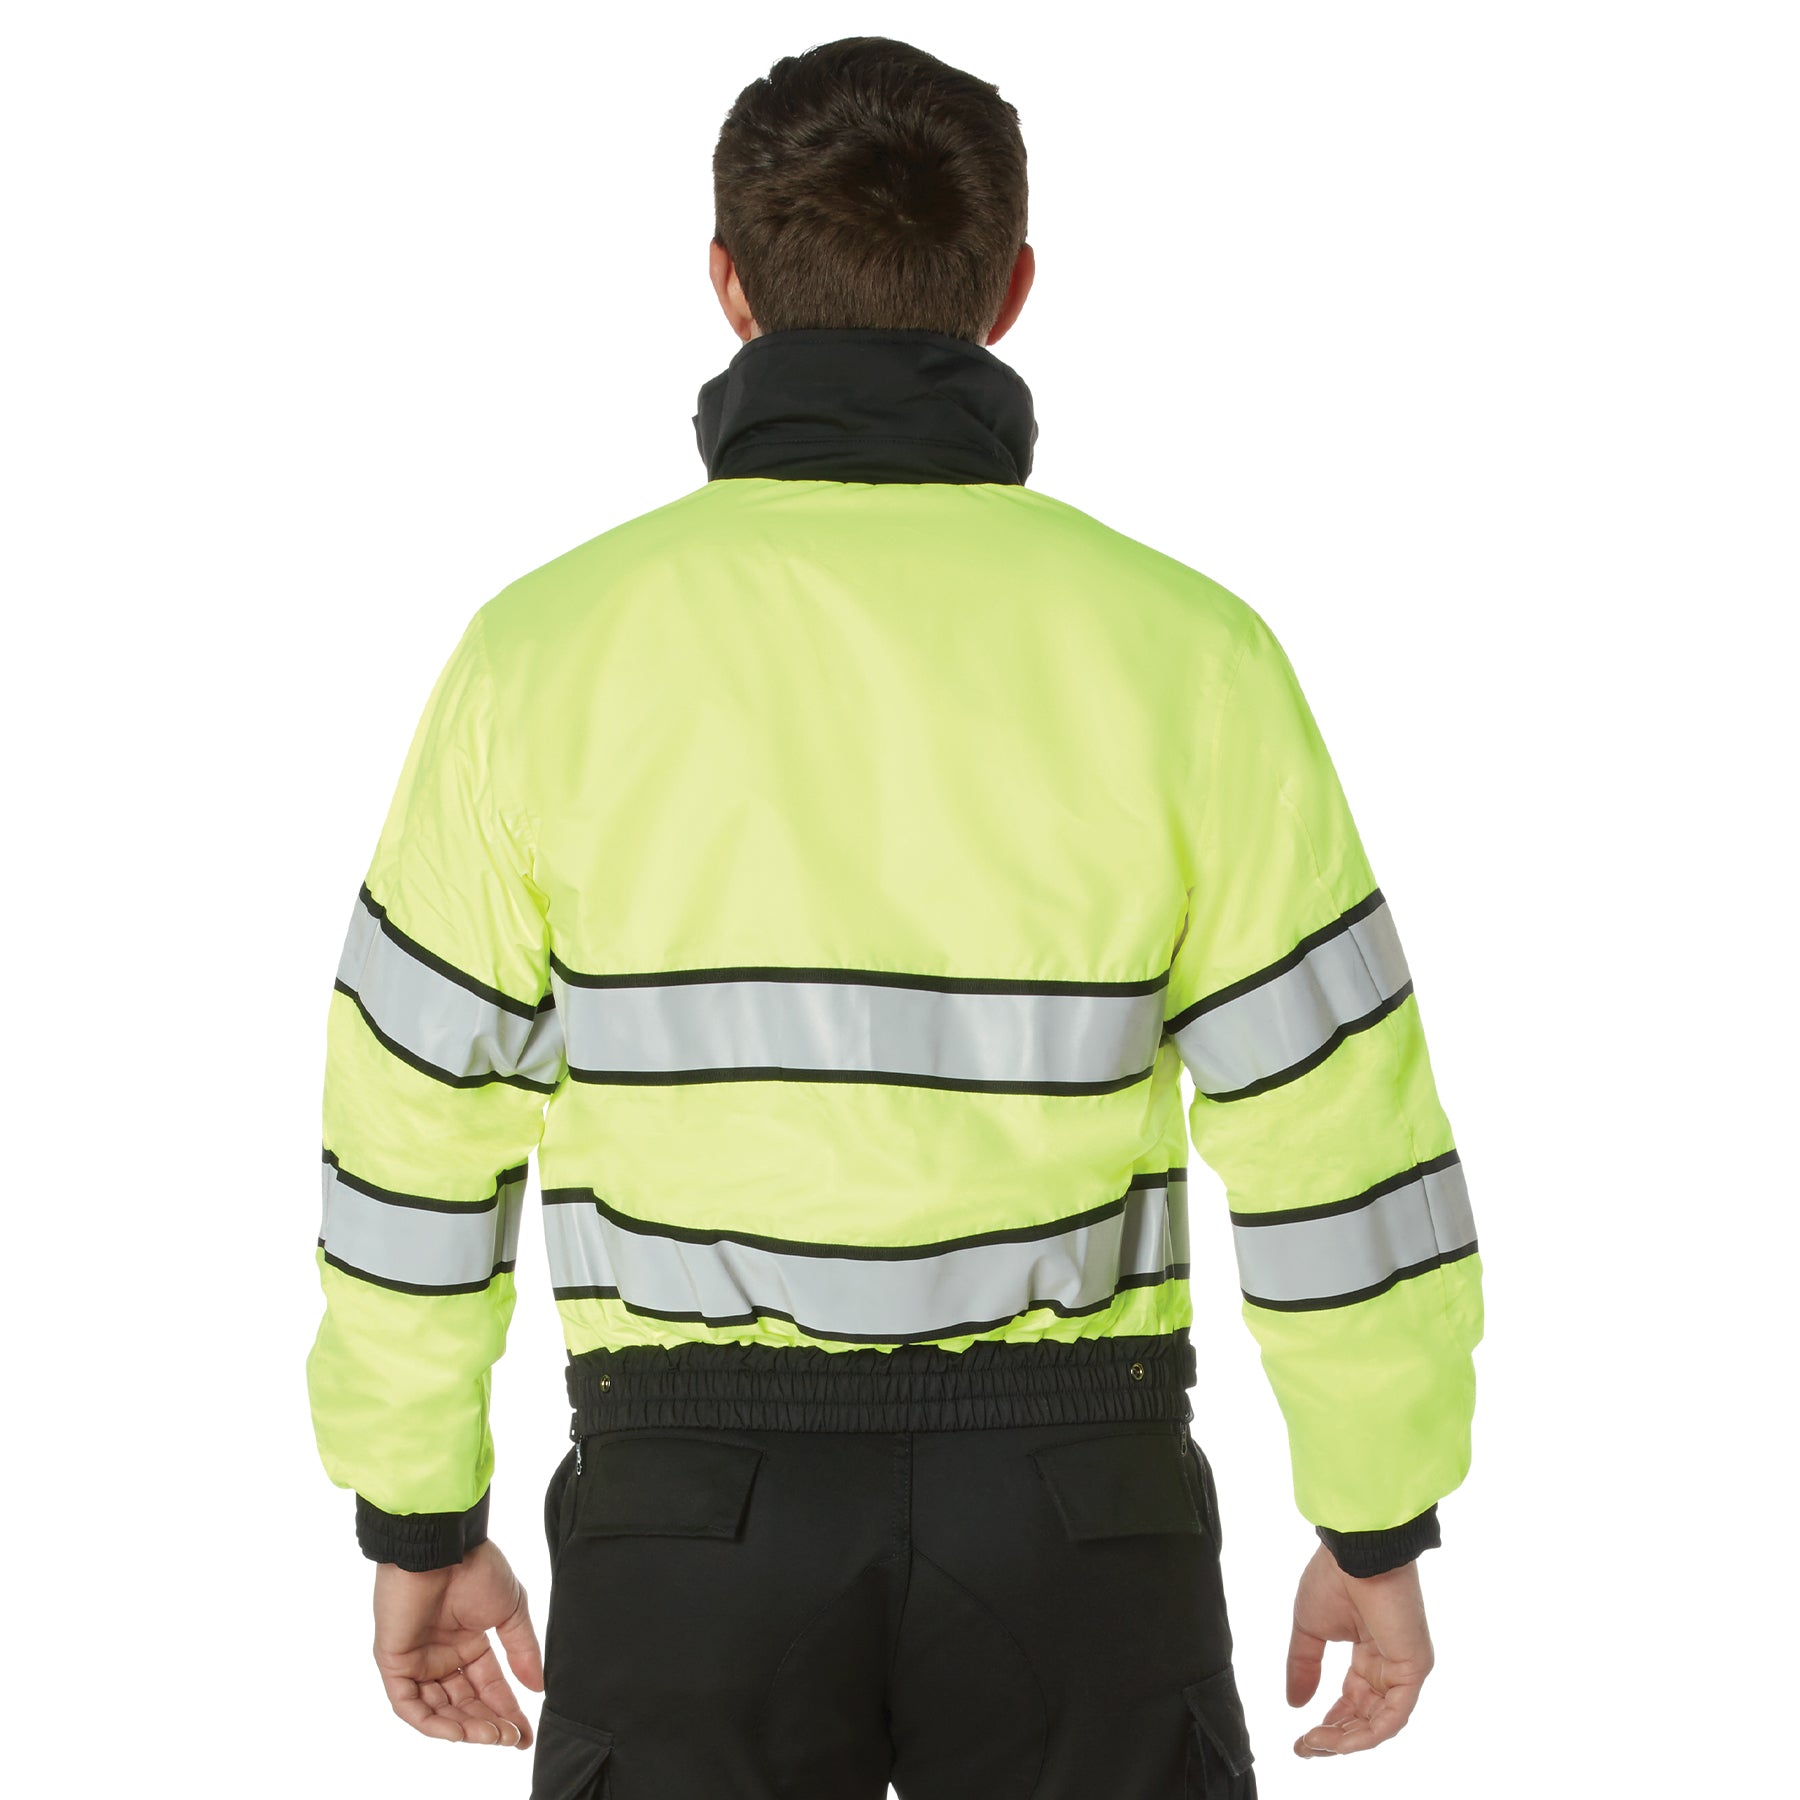 Rothco 8720: Dual-Sided Hi-Viz Yellow & Classic Black Reversible Uniform Jacket - Clothing & Accessories